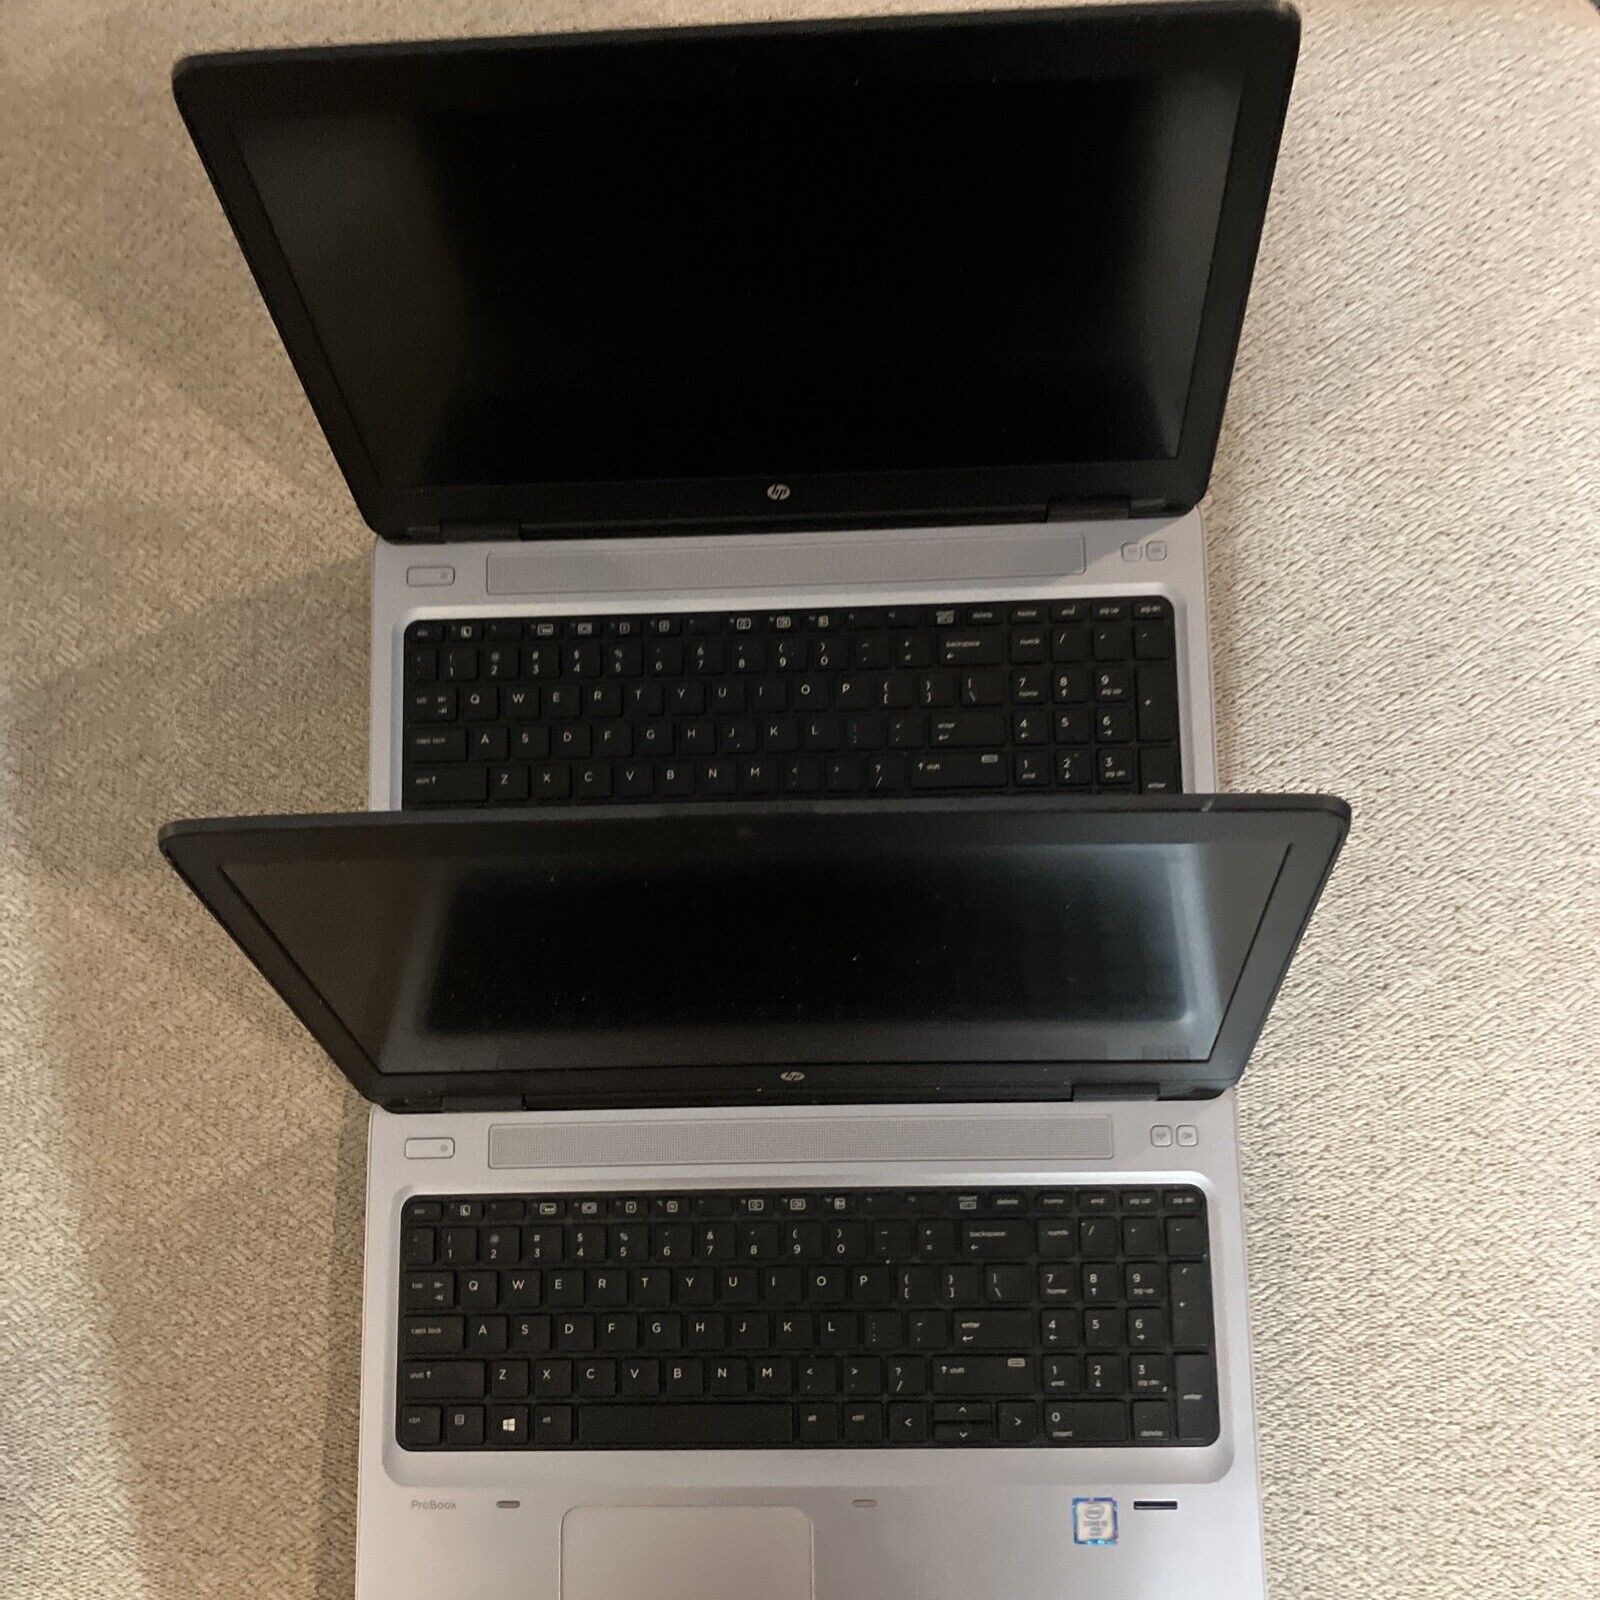 Lot of 2 HP ProBook 650 G2 laptops. Parts not working